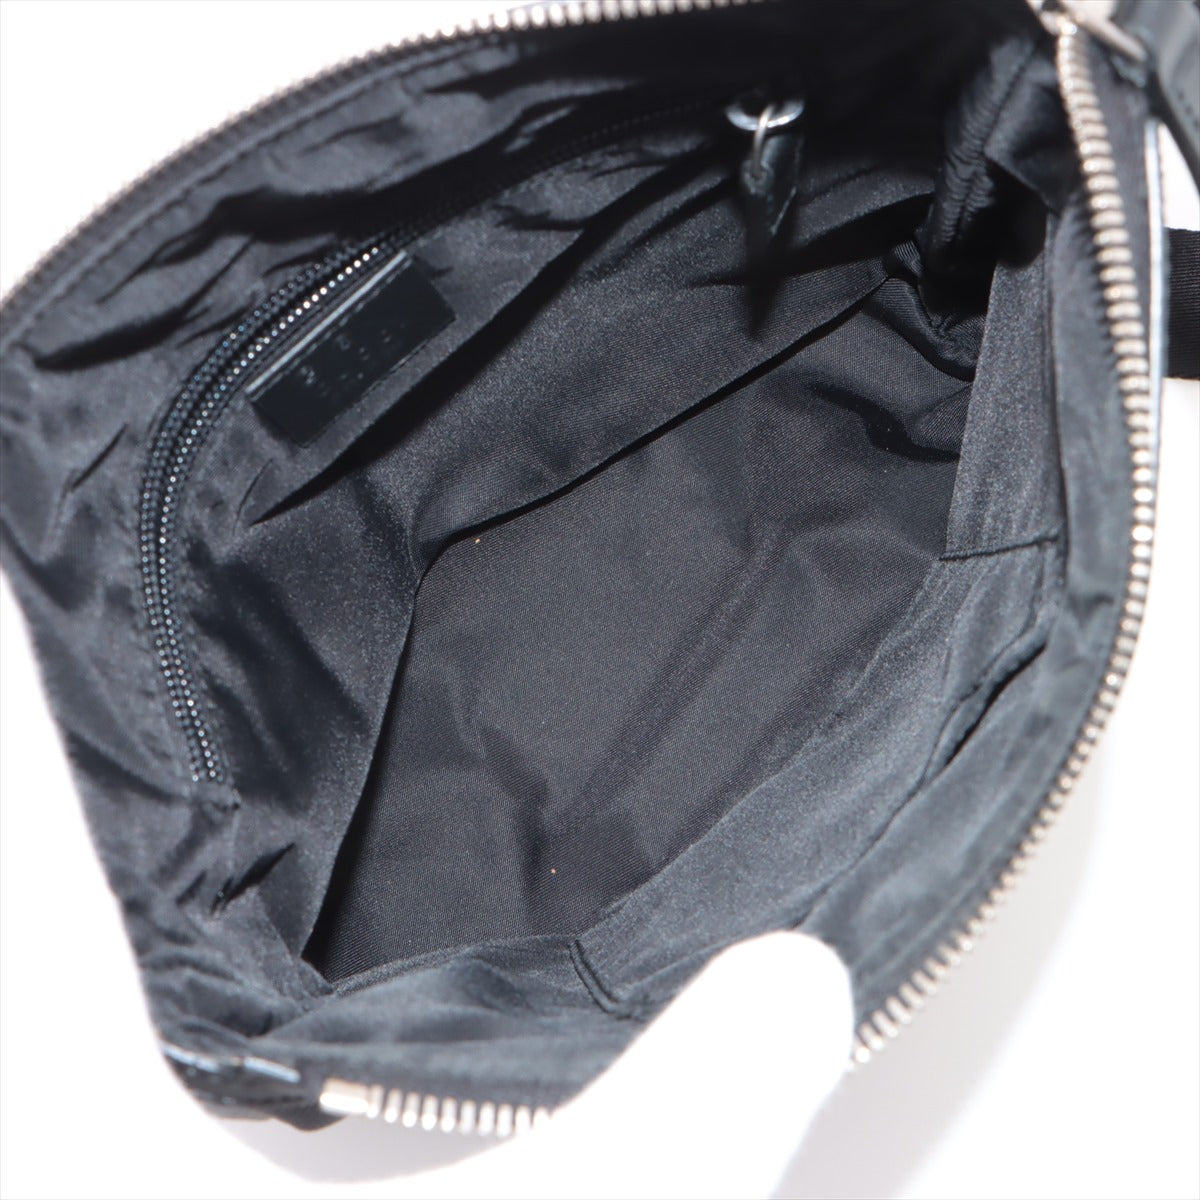 Gucci Nylon Shoulder Bag Black 631195